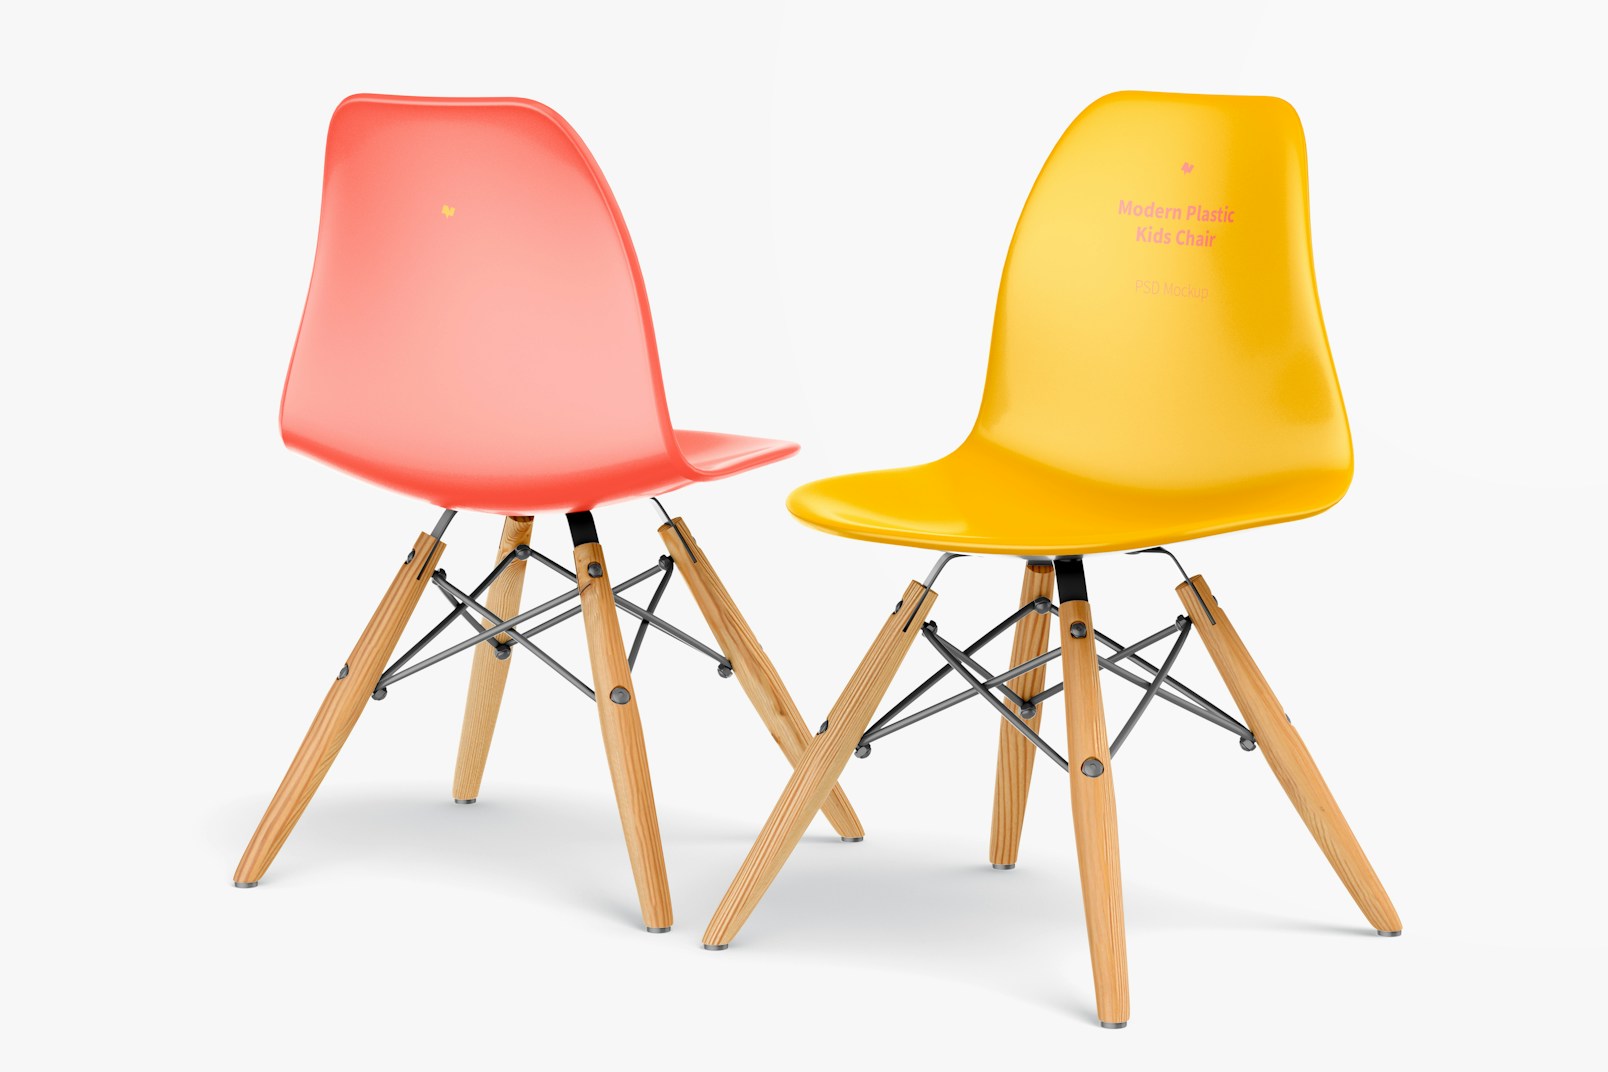 Modern Plastic Kids Chairs Mockup